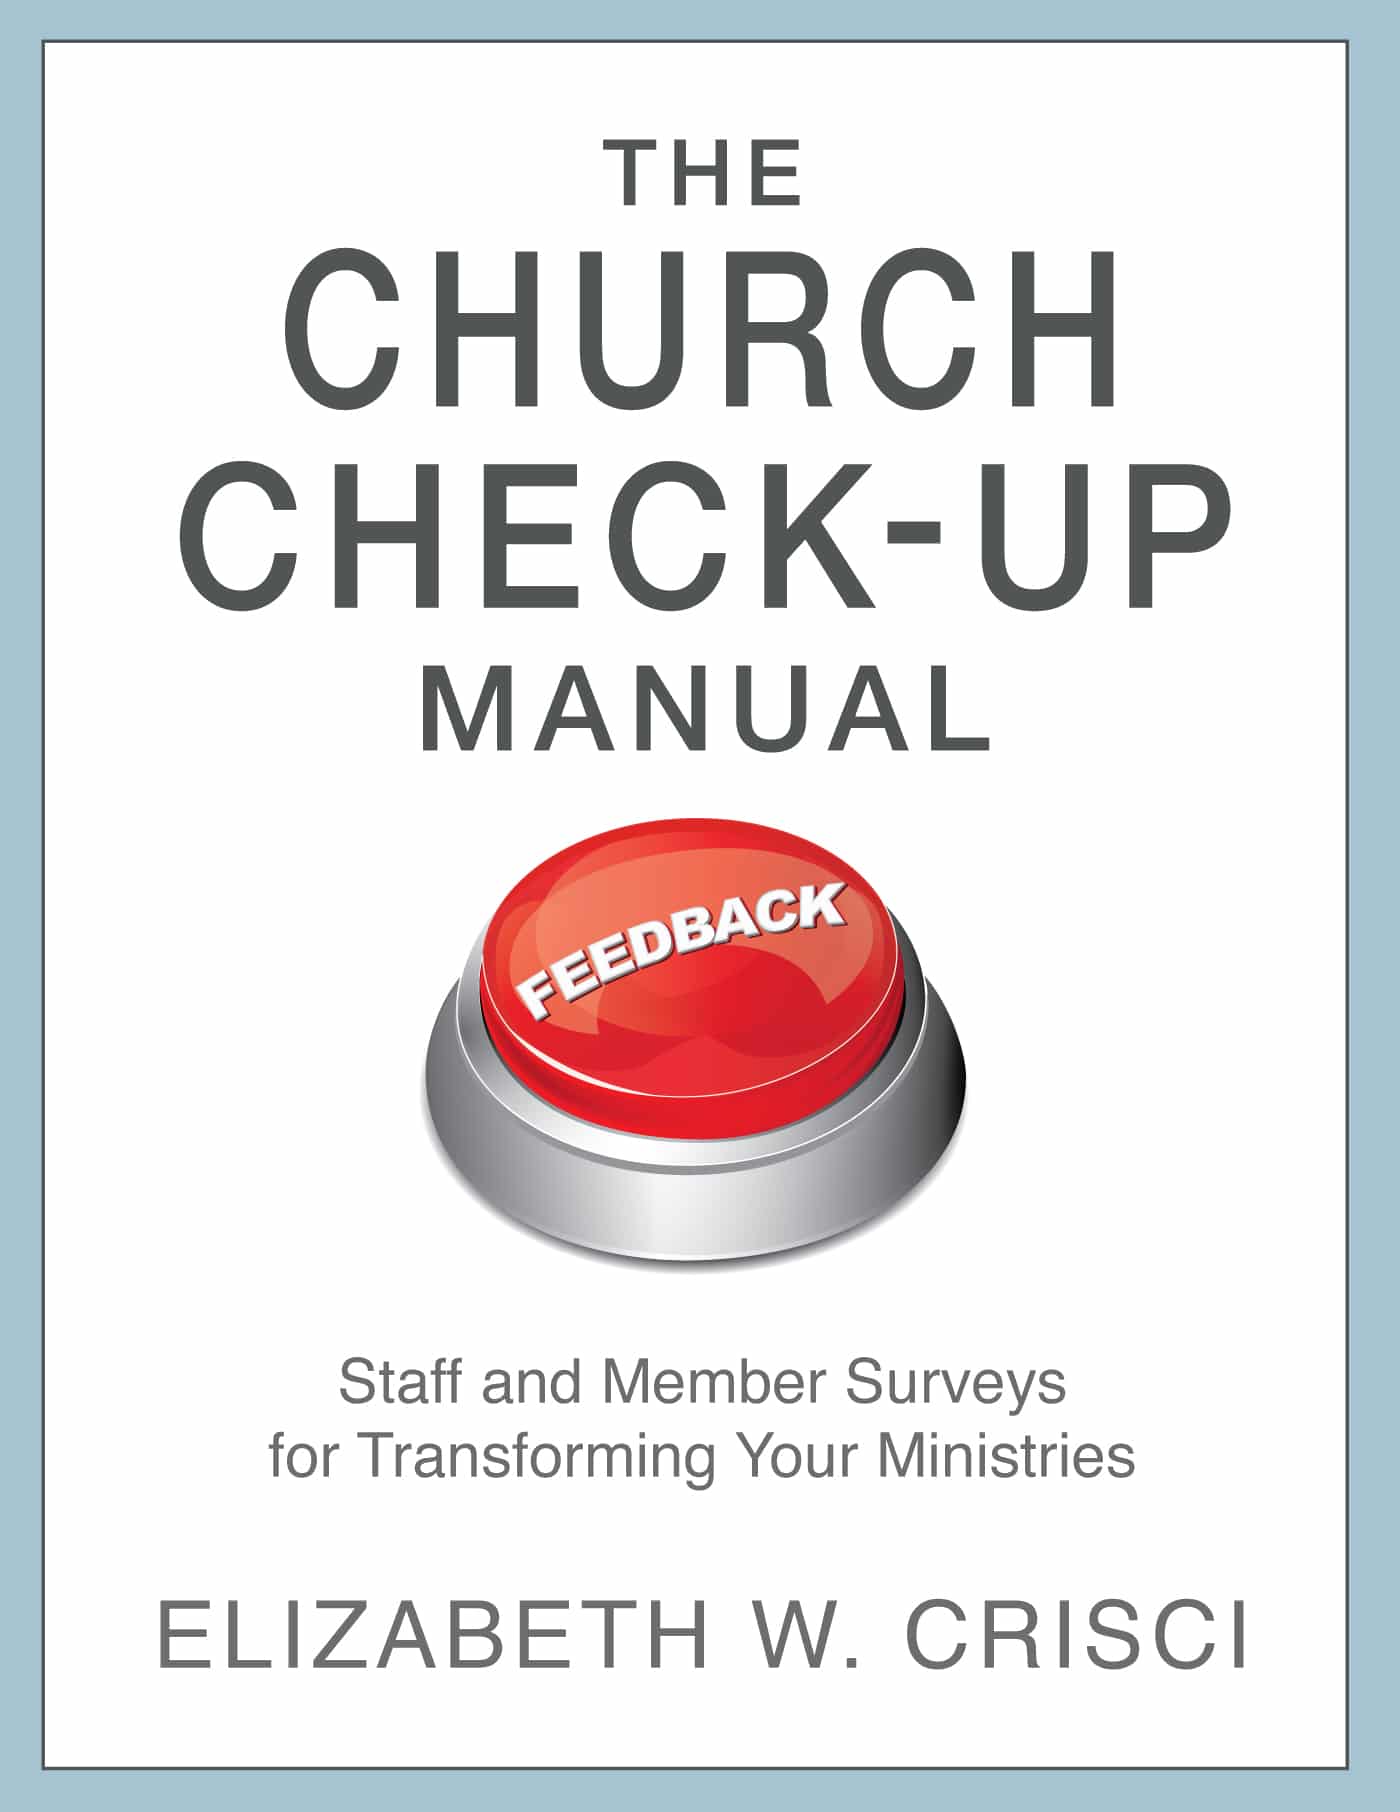 The Church Check-Up Manual